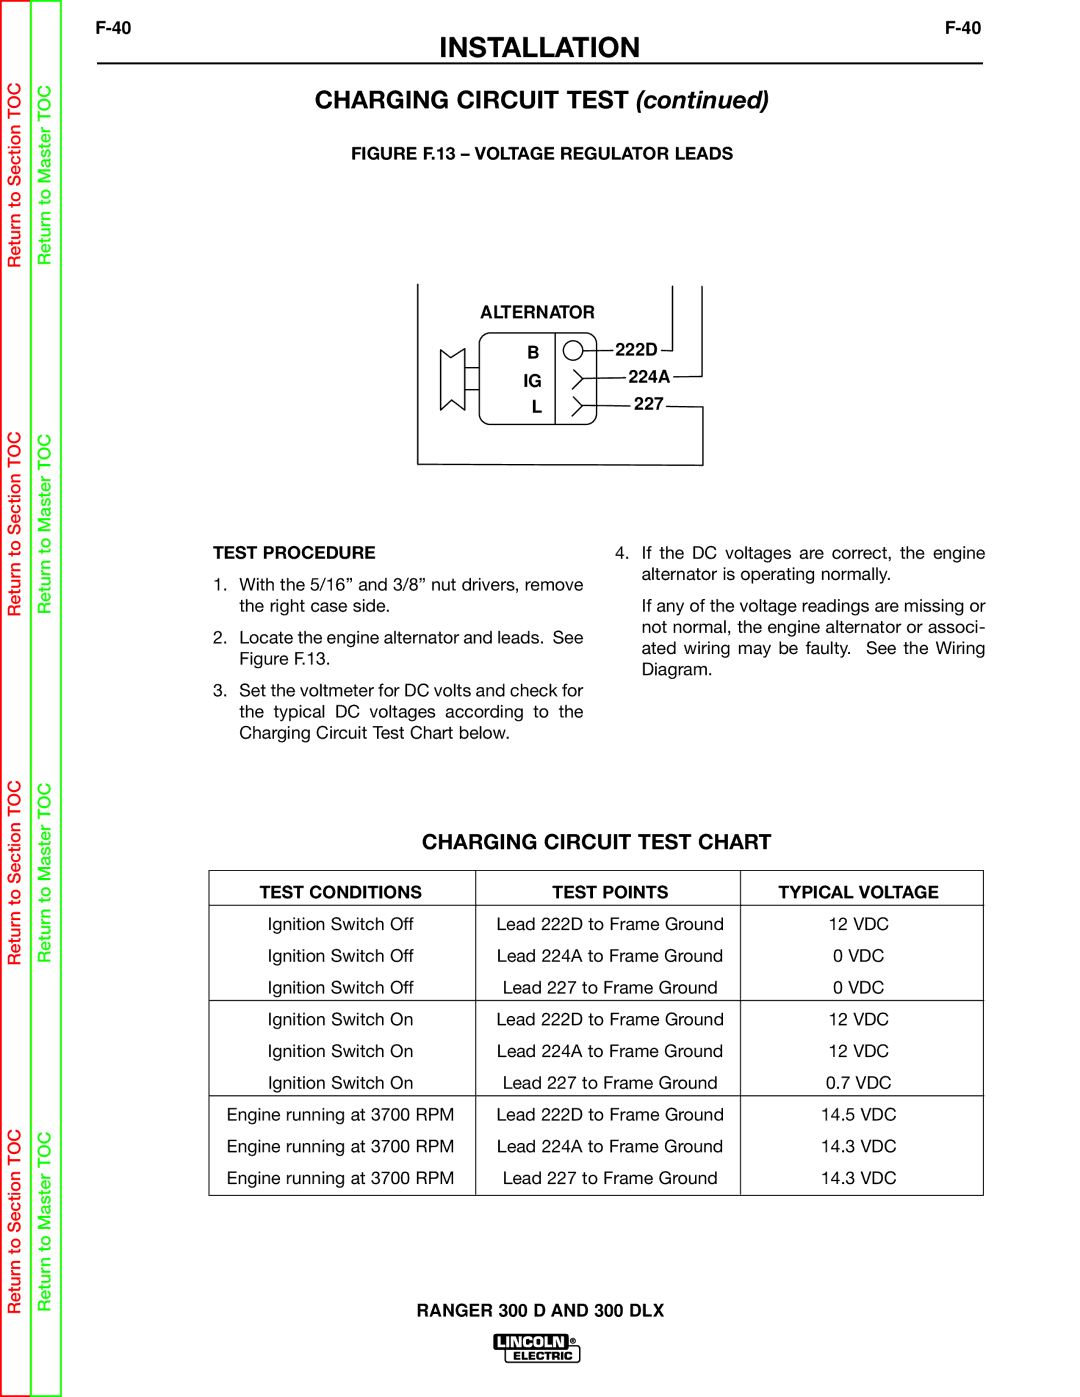 Lincoln Electric SVM148-B service manual Charging Circuit Test, Alternator Test Procedure 